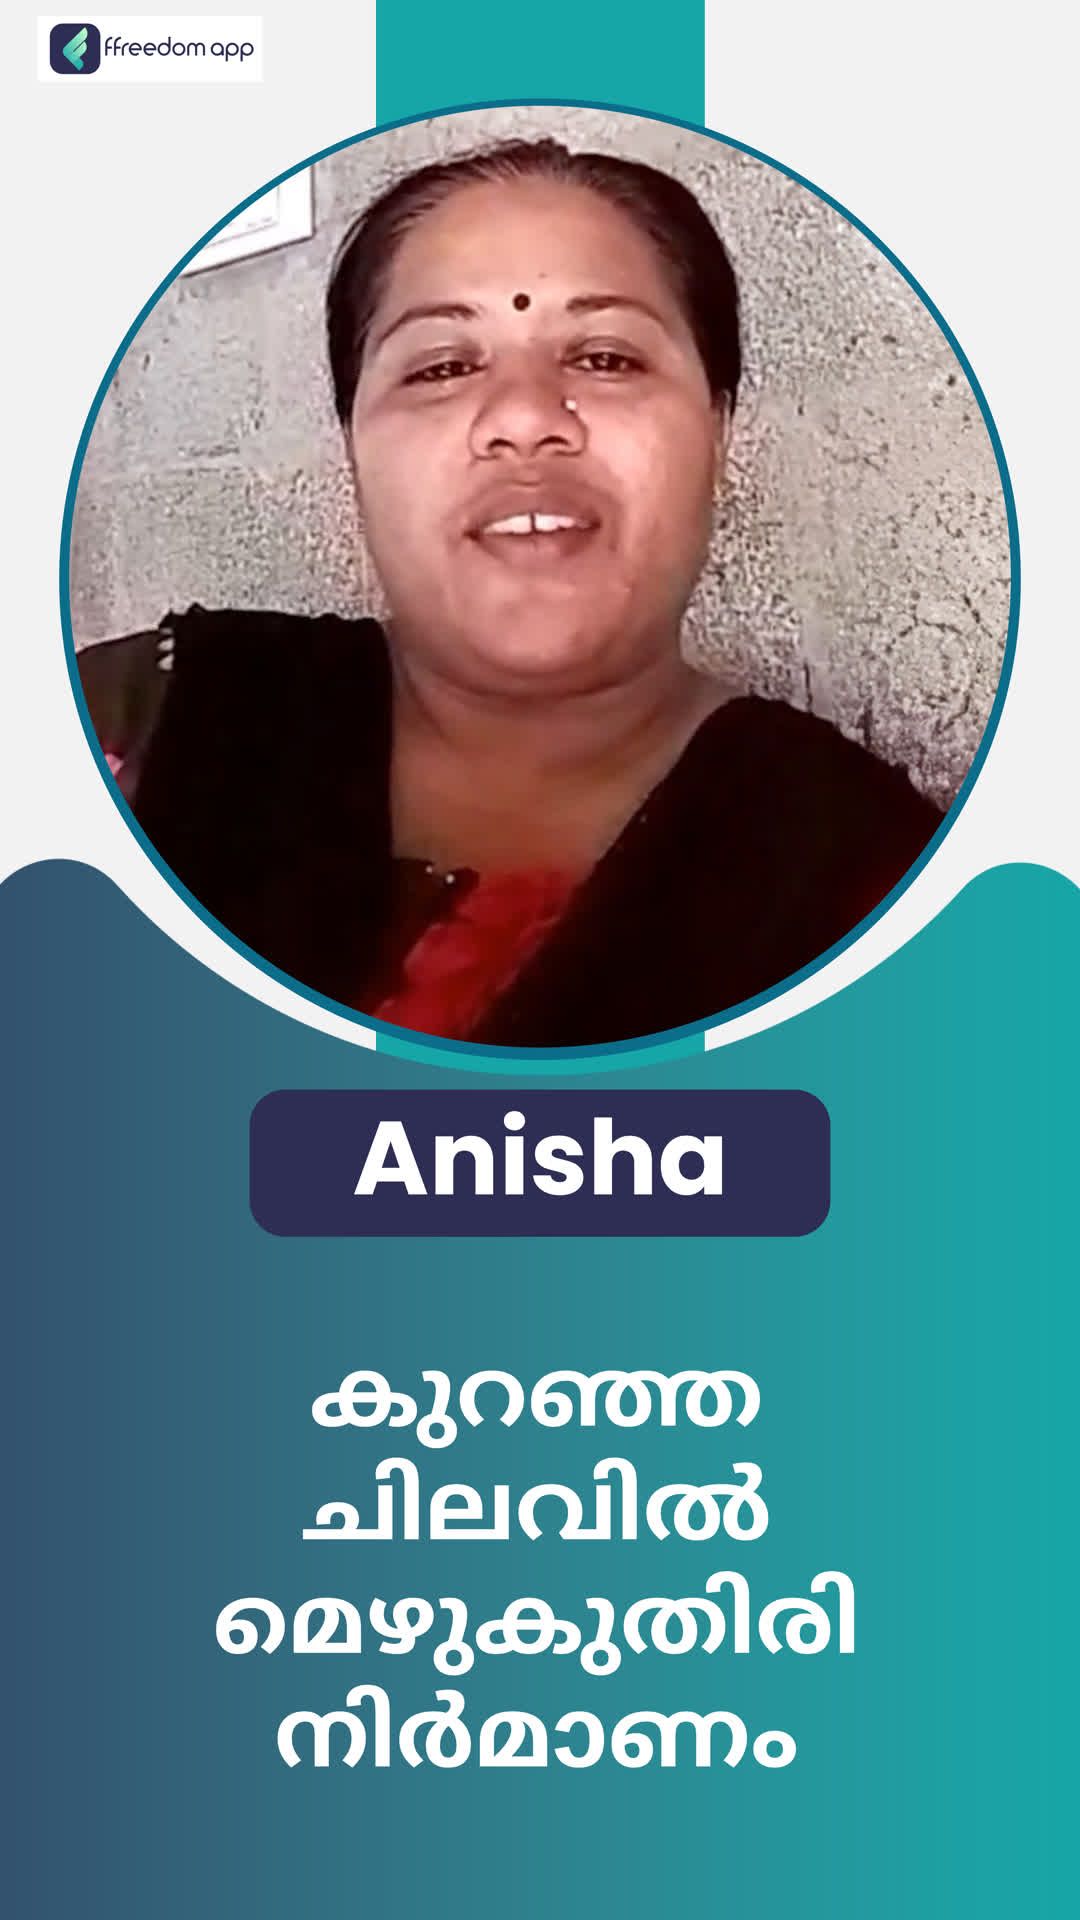 Anisha's Honest Review of ffreedom app - Trivandrum ,Kerala